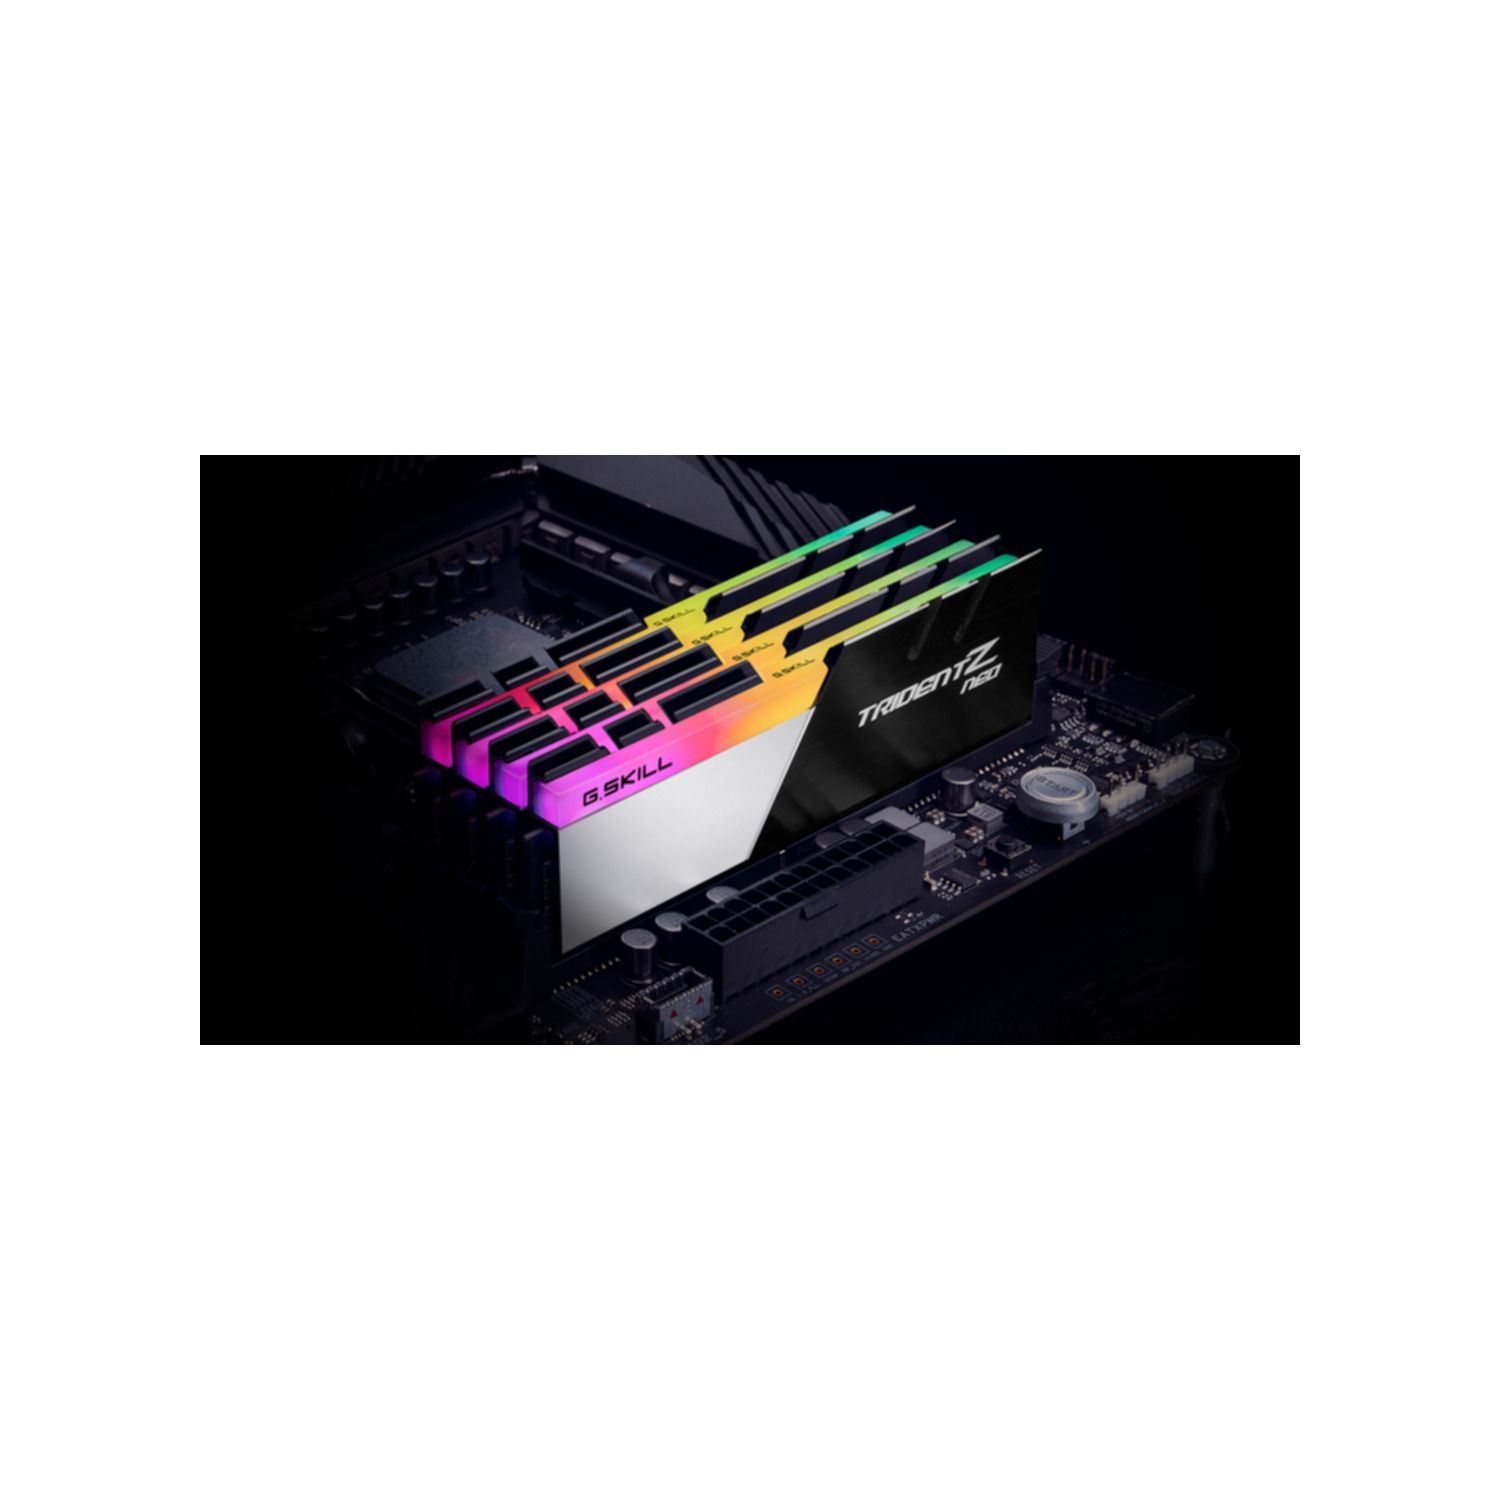 DDR4 G.SKILL F4-3600C16D-16GTZNC Arbeitsspeicher GB 16